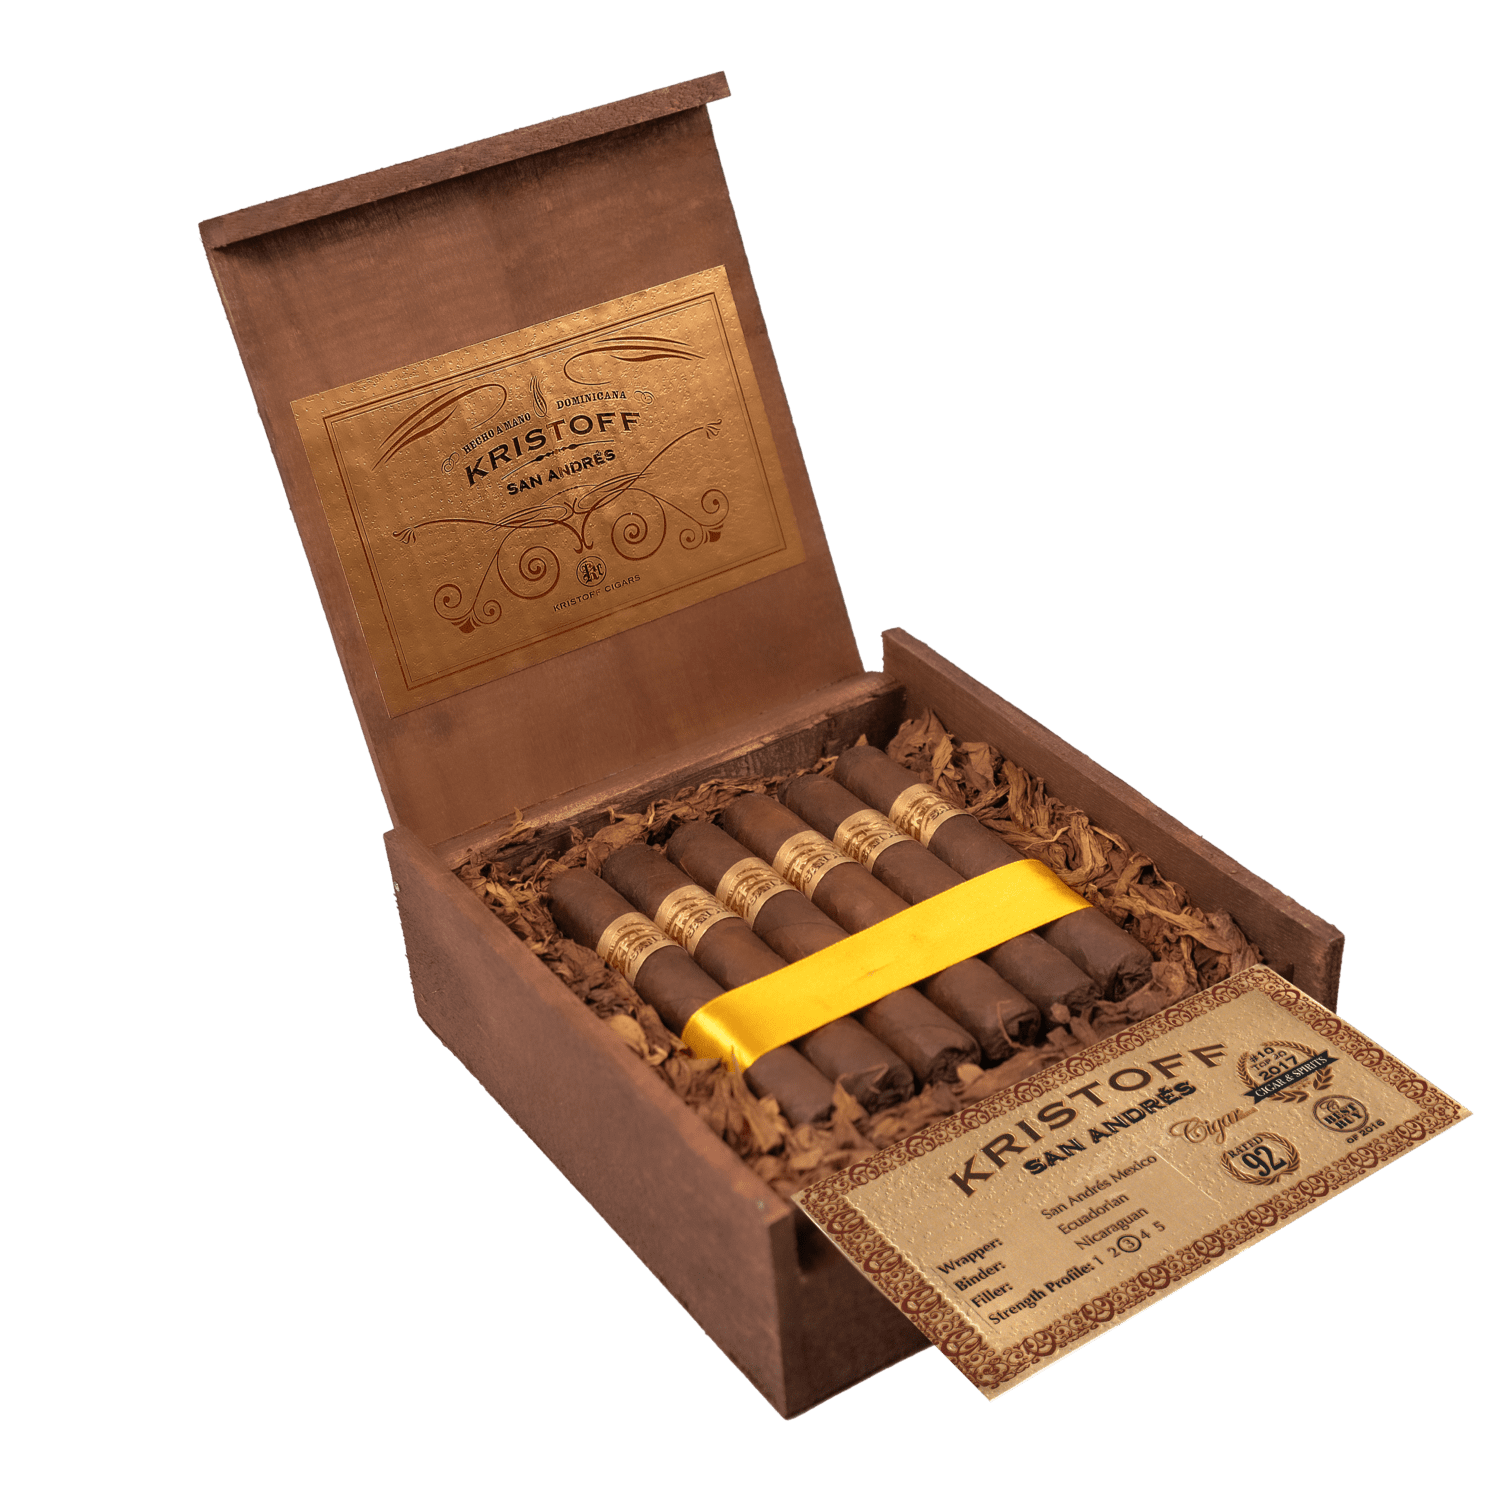 Kristoff Cigars: San Andrés Finest Cigar